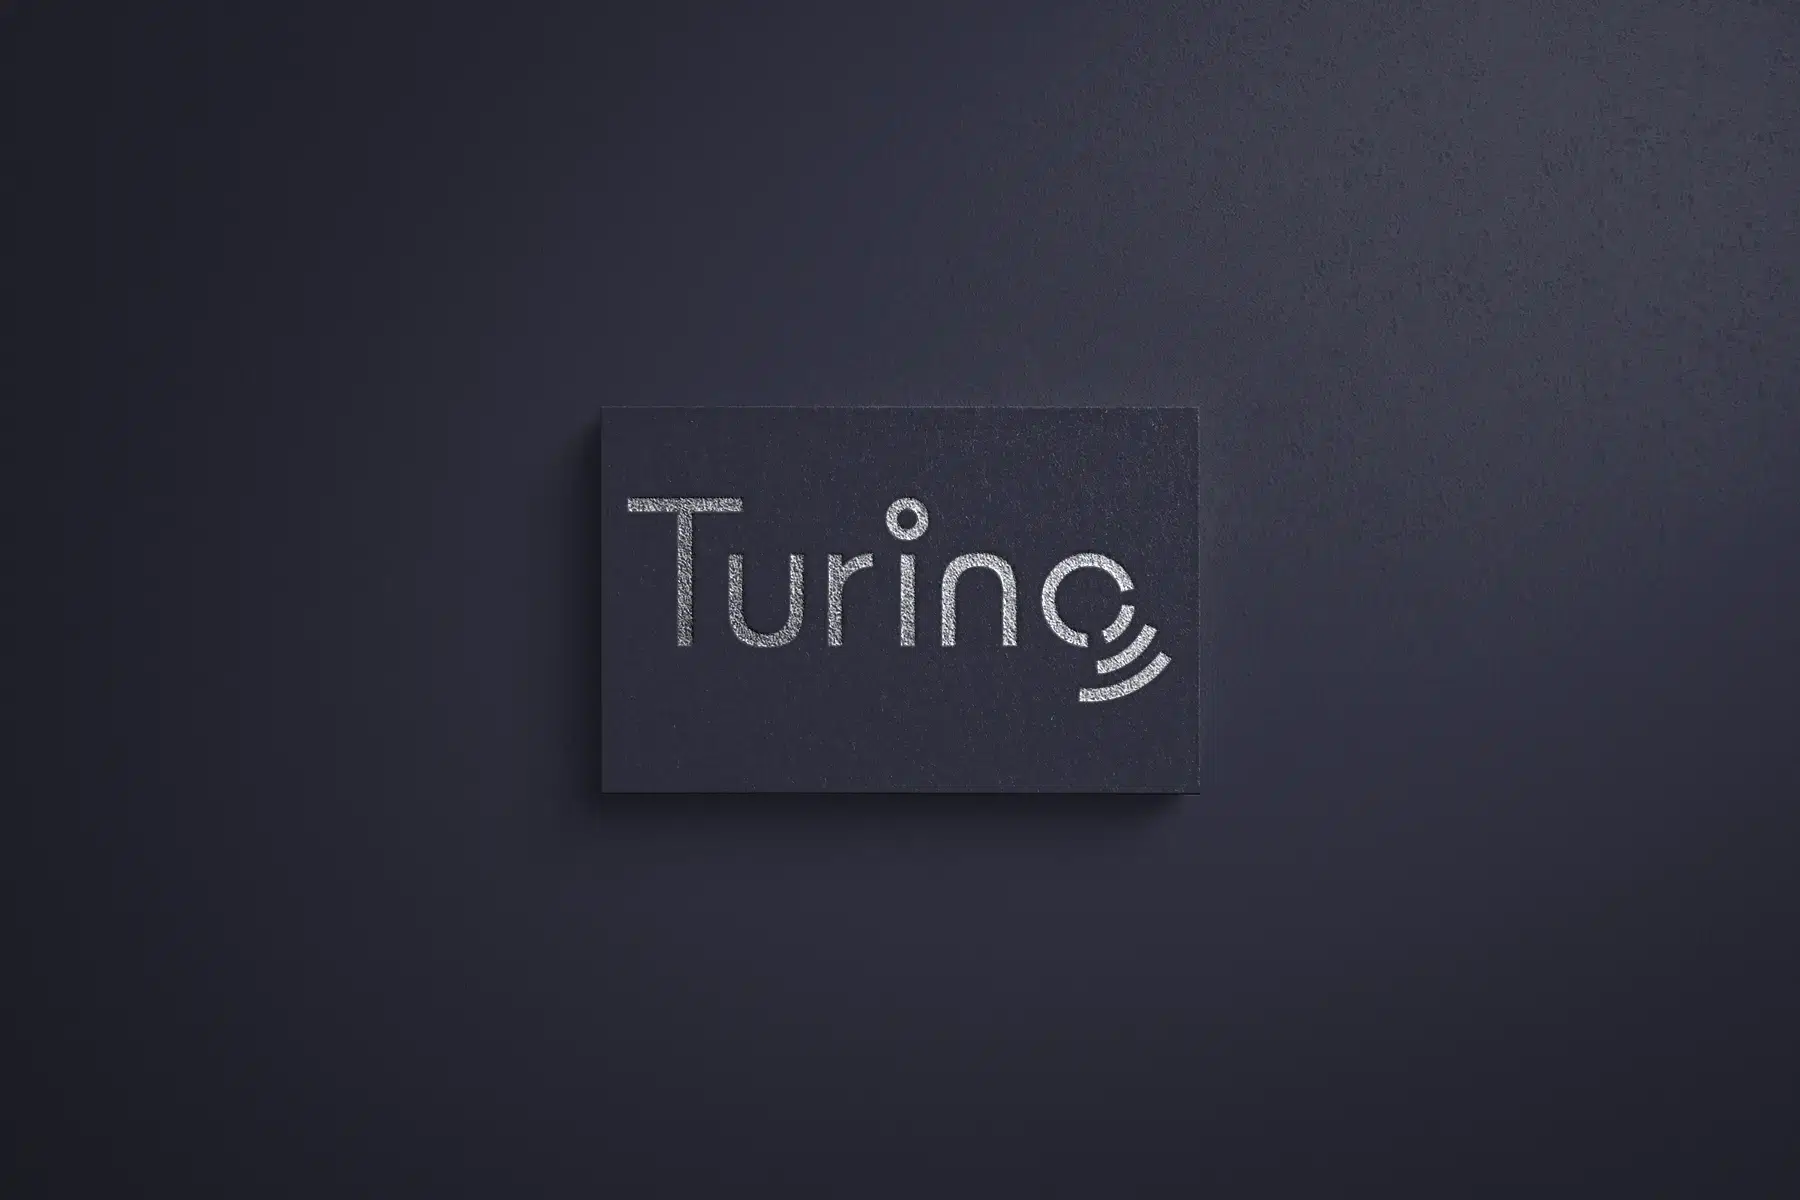 Hossein Post Turing logo copy